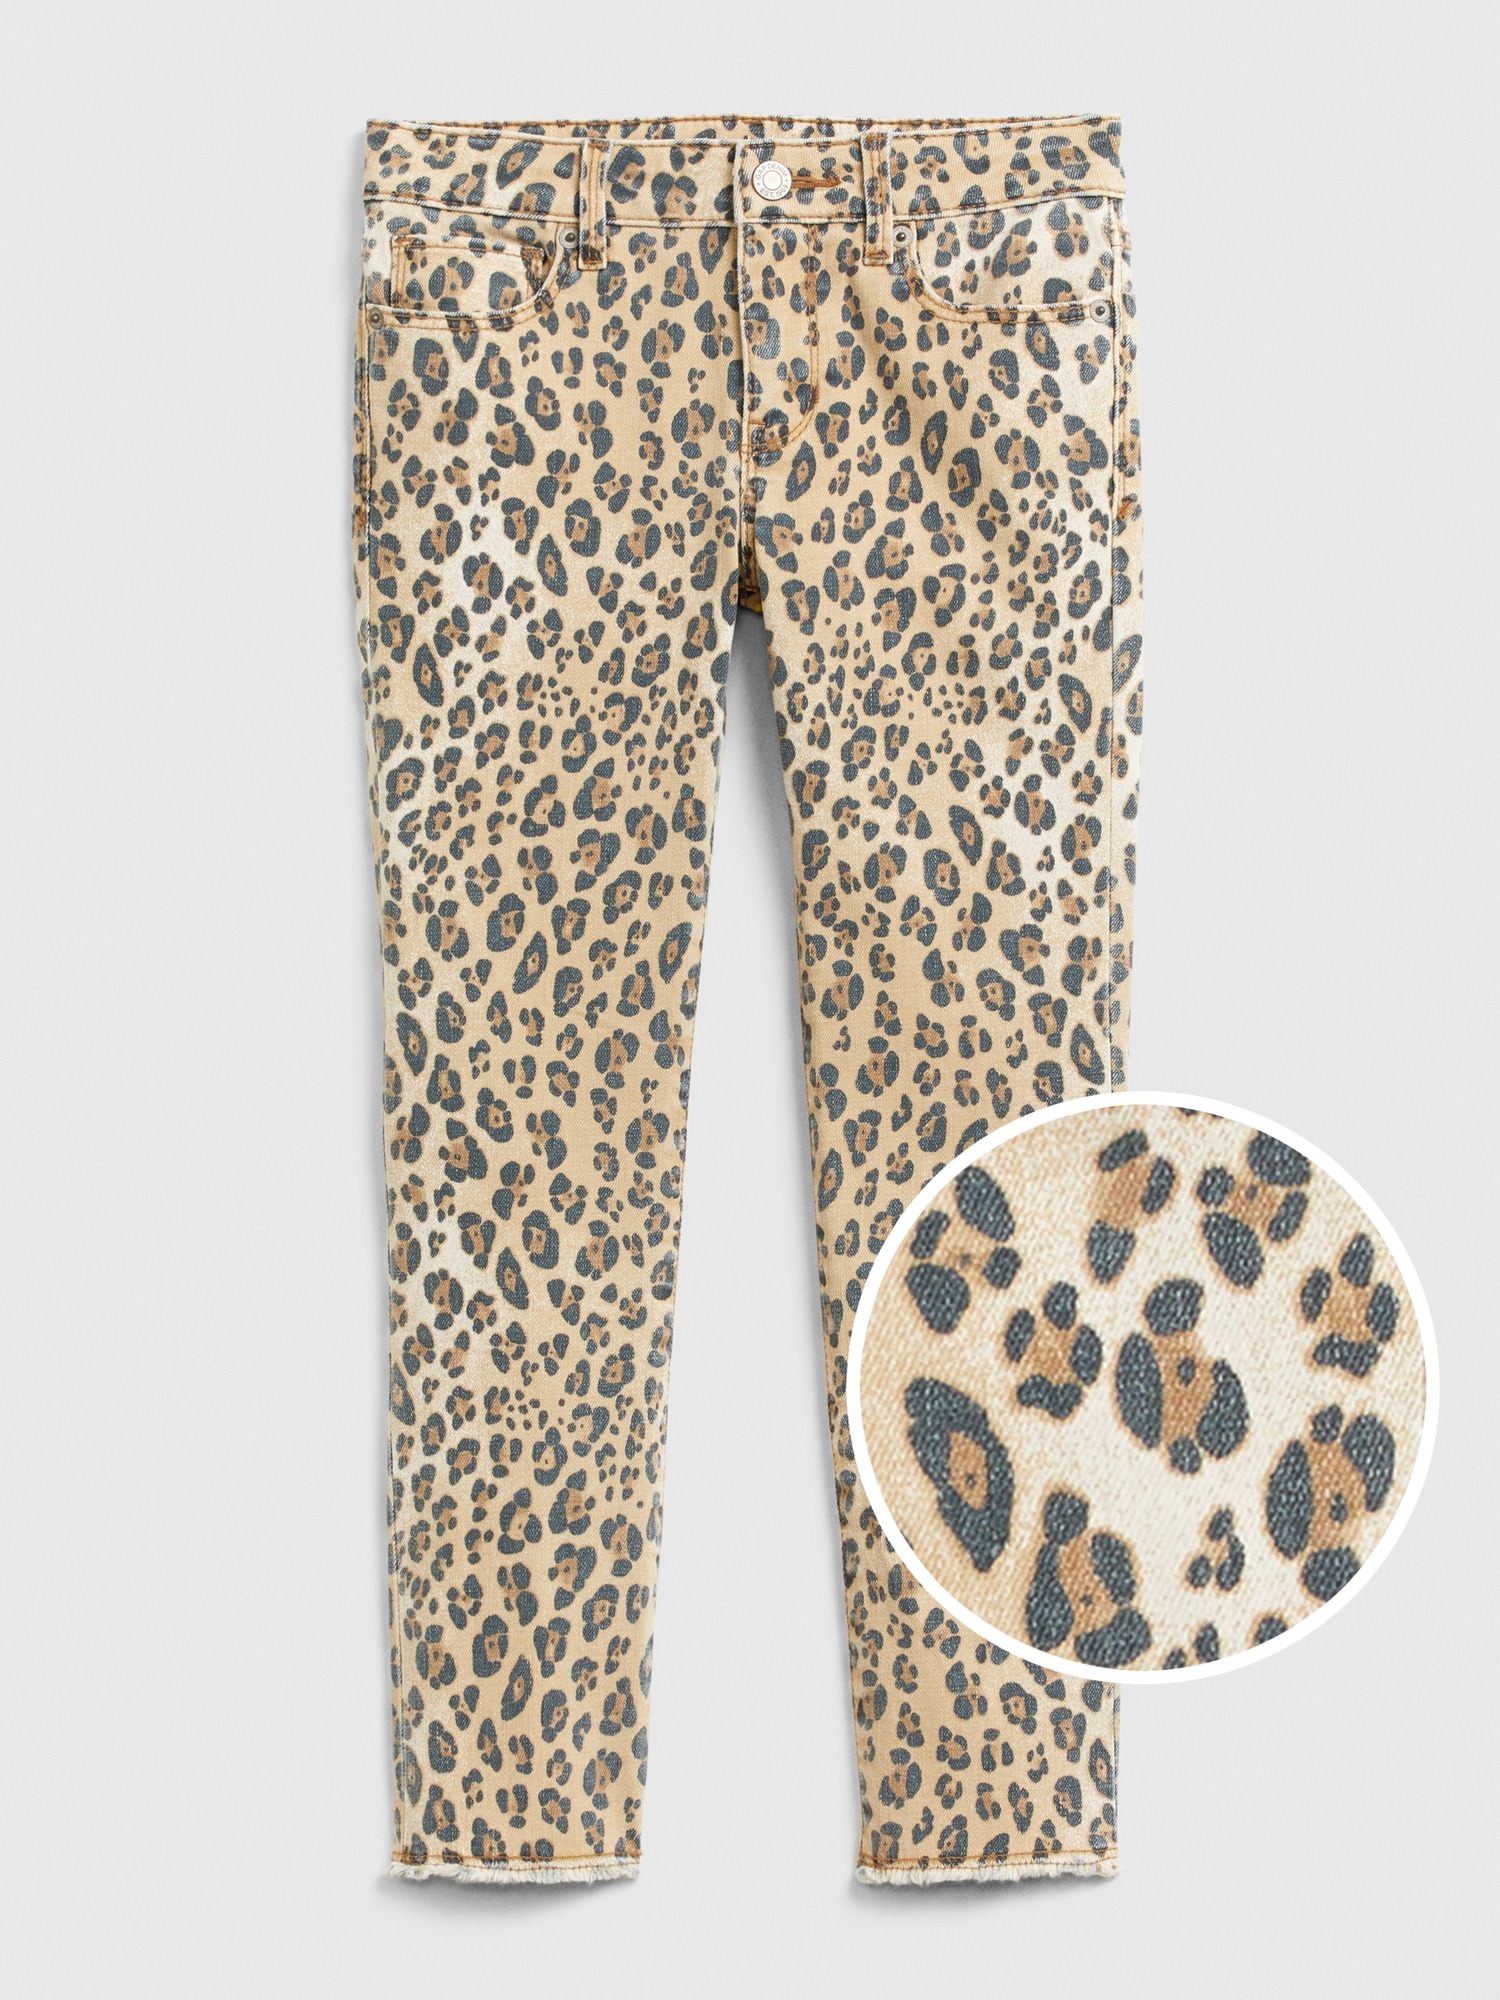 leopard print stretch jeans